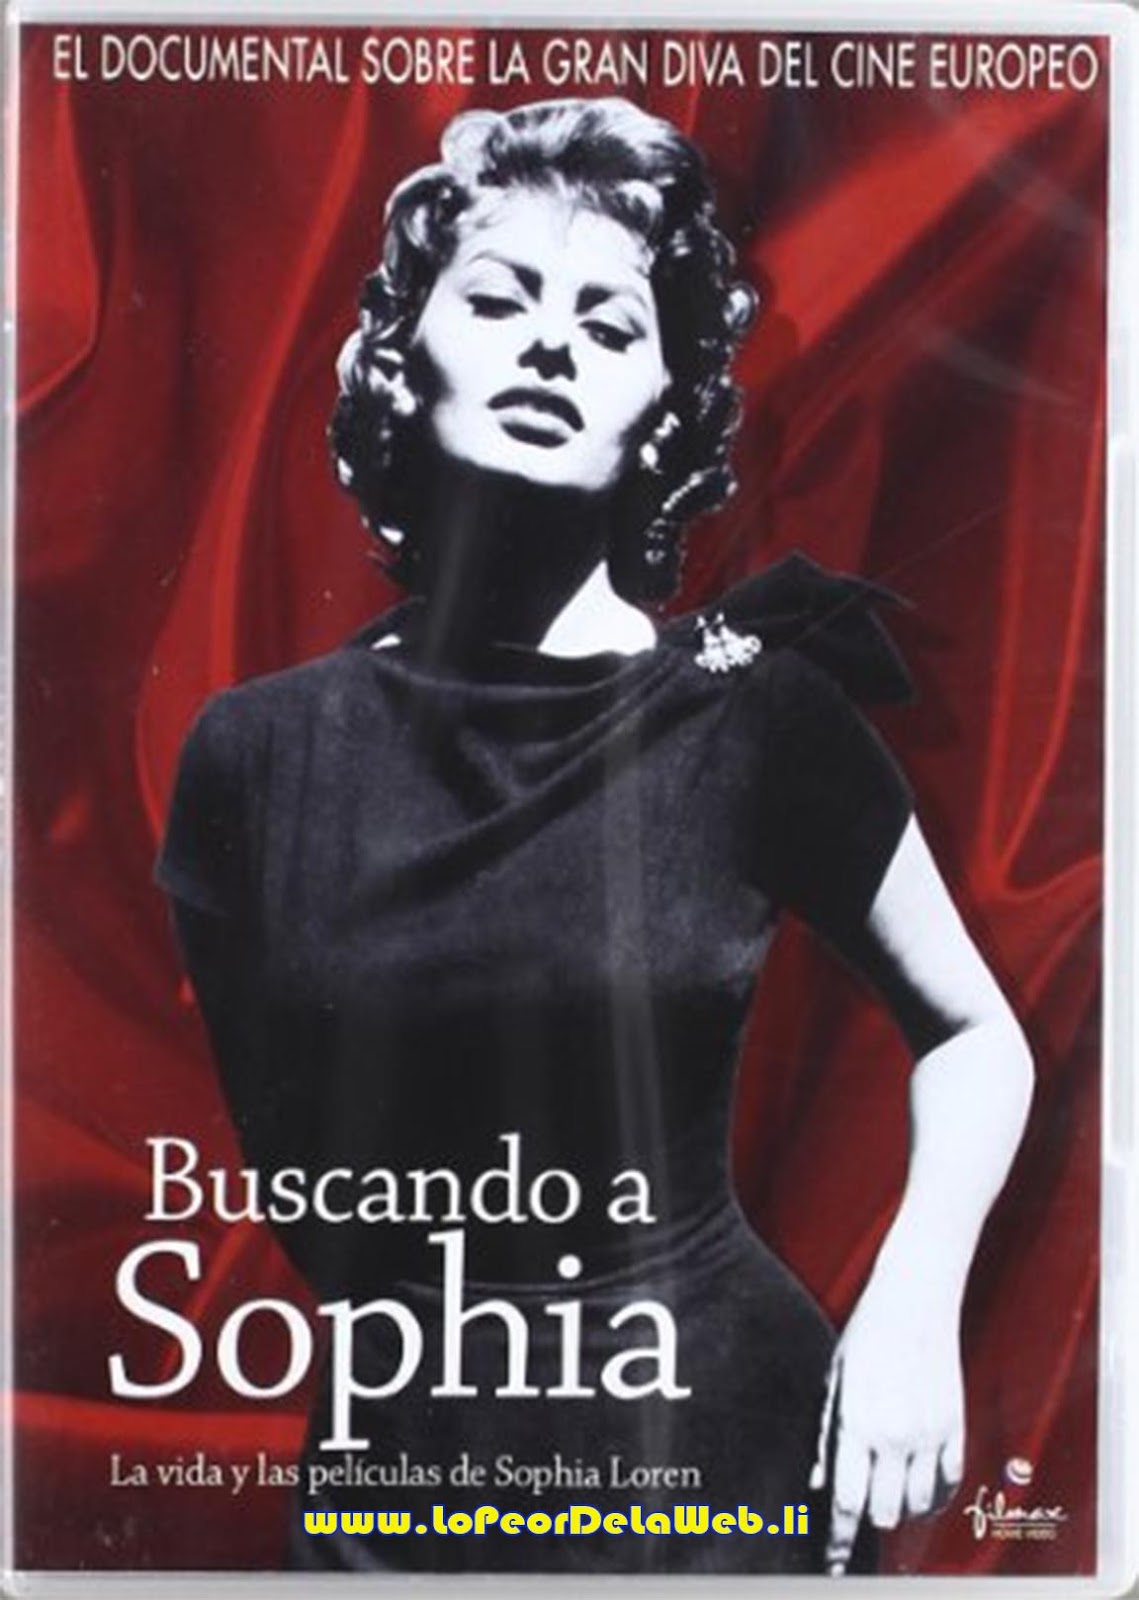 Buscando a Sophia (Loren) Documental - 2004